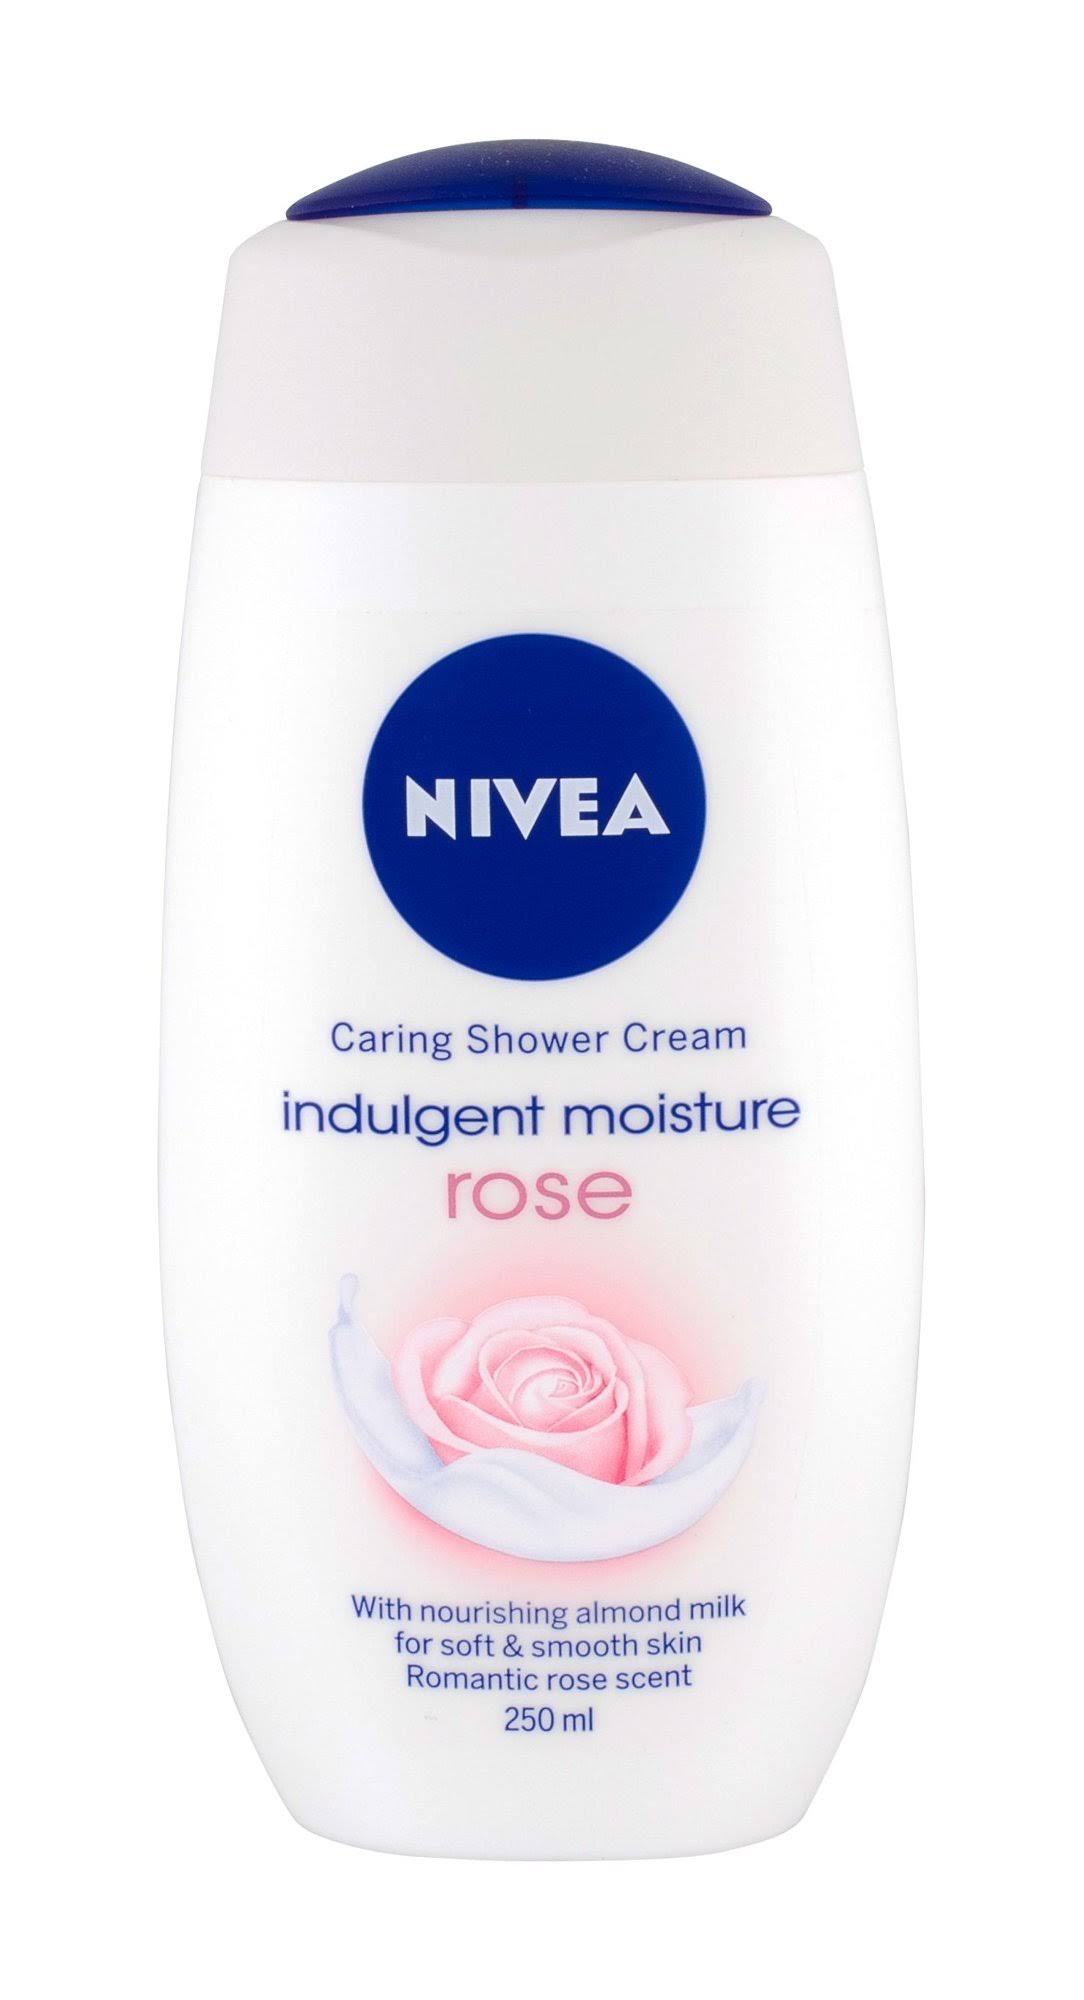 Nivea Caring Shower Cream - Rose, 250ml